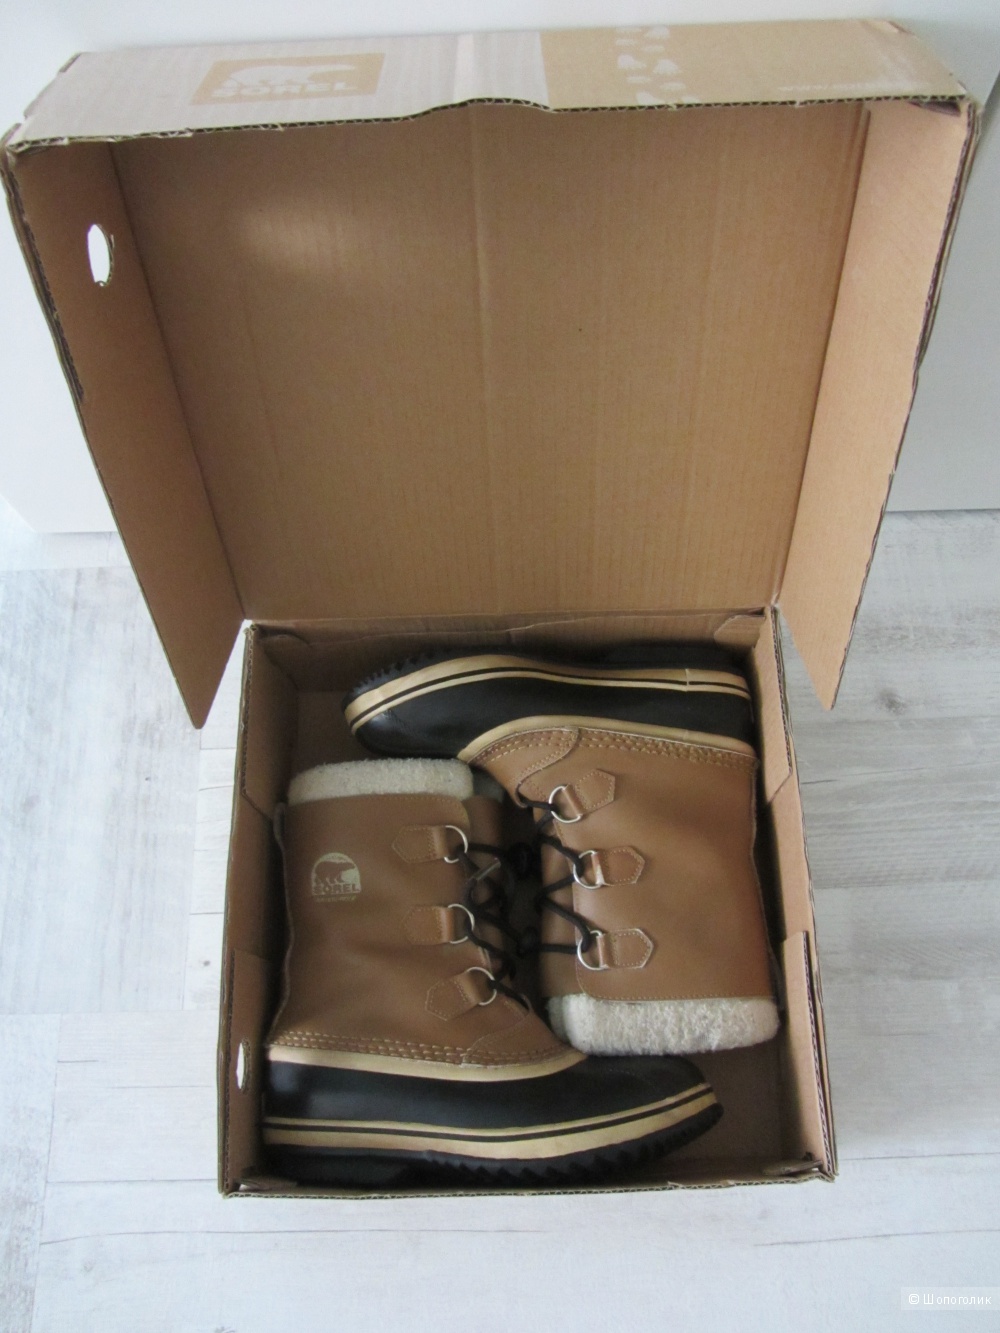 Зимние ботинки Sorel waterproof  размер 38